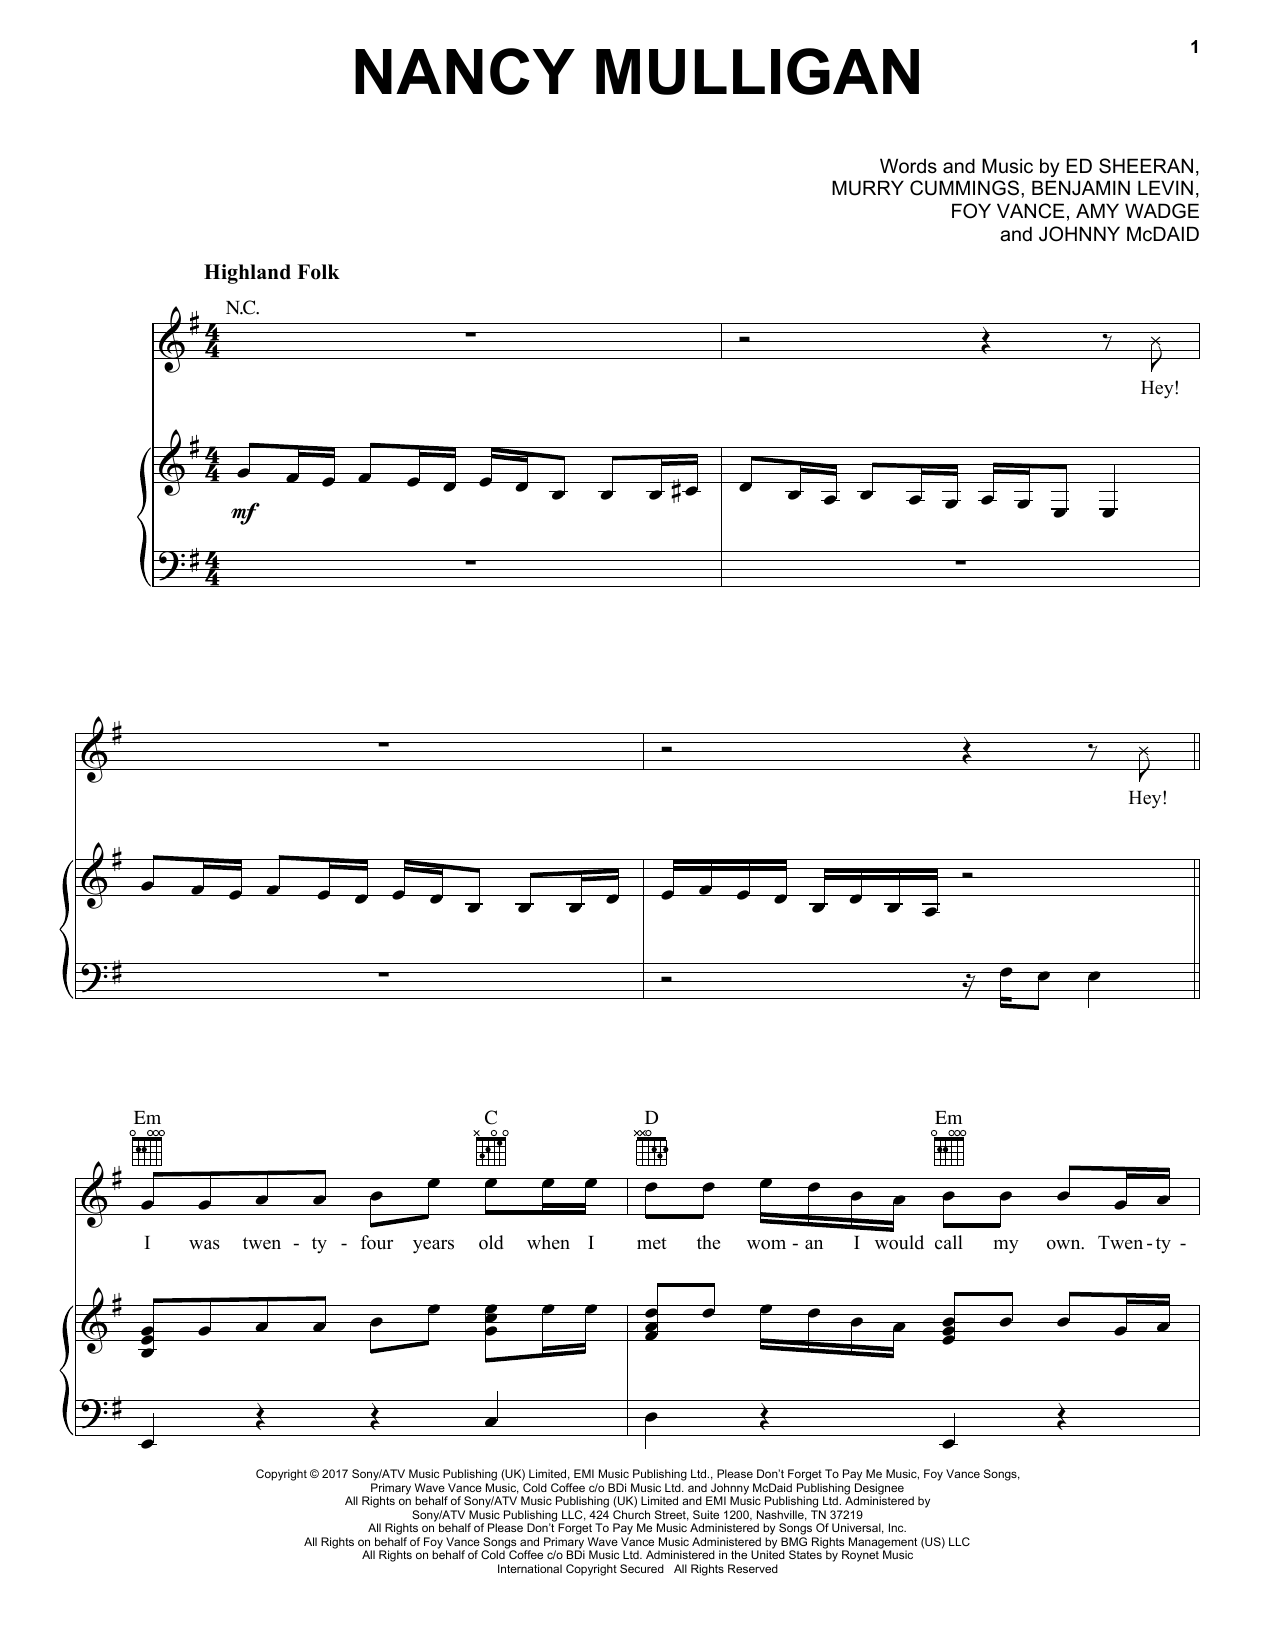 Download Ed Sheeran Nancy Mulligan Sheet Music and learn how to play Lyrics & Chords PDF digital score in minutes